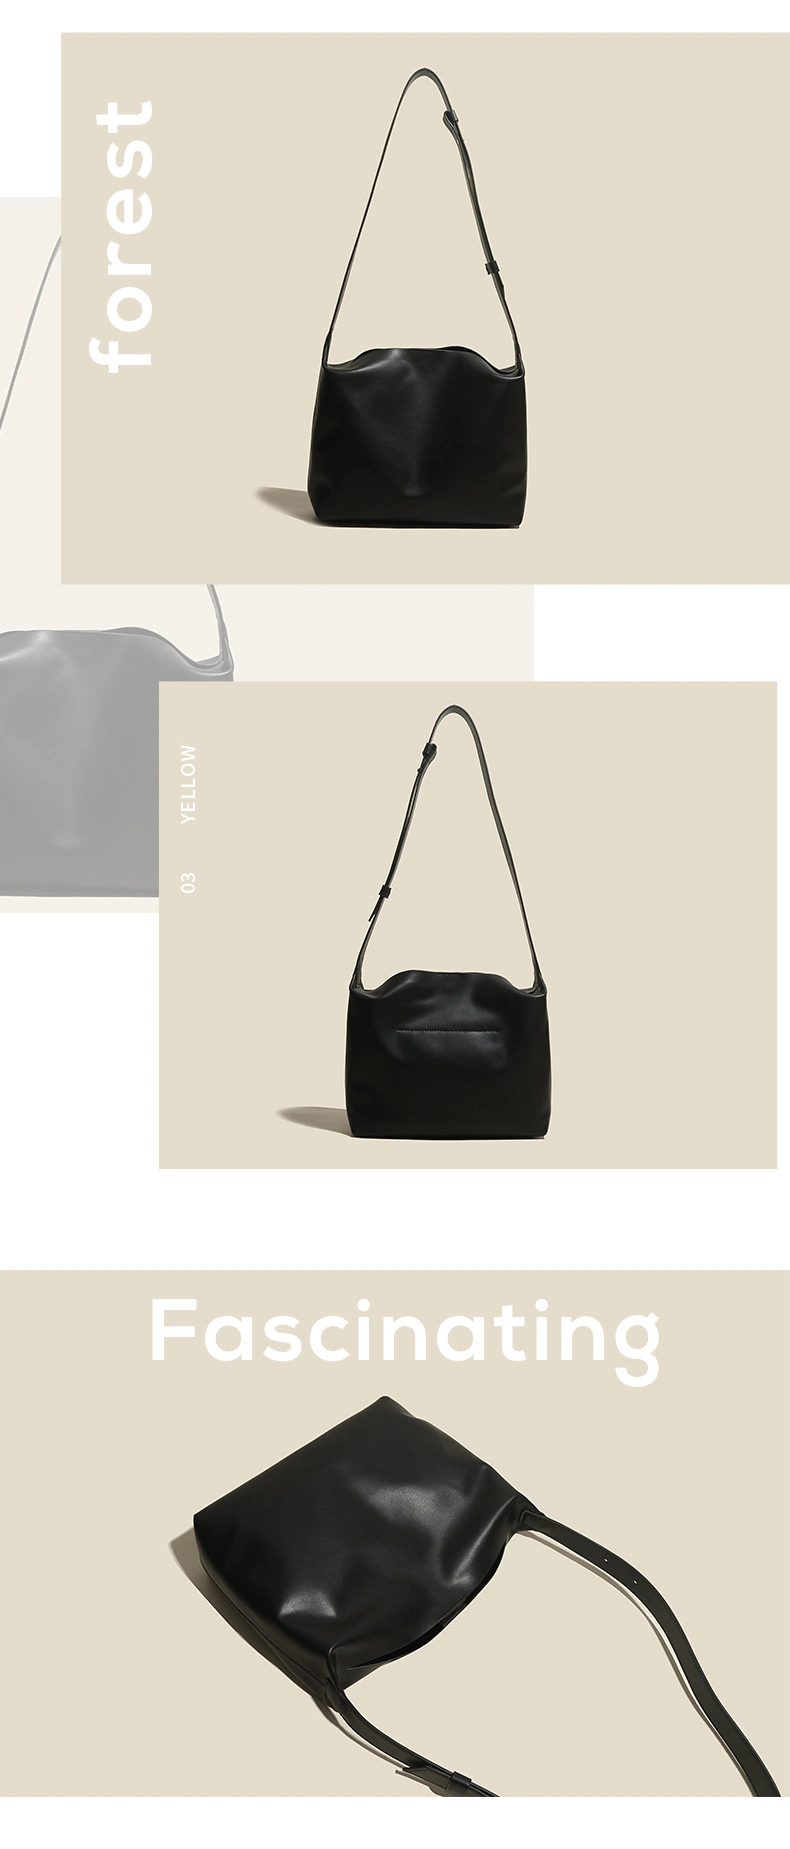 Emg6521 Bucket Purse Real Fashion Wholesale Handbag Women Underarm Armpit Ladies Woman Tote Luxury Leather Custom Shoulder Bag